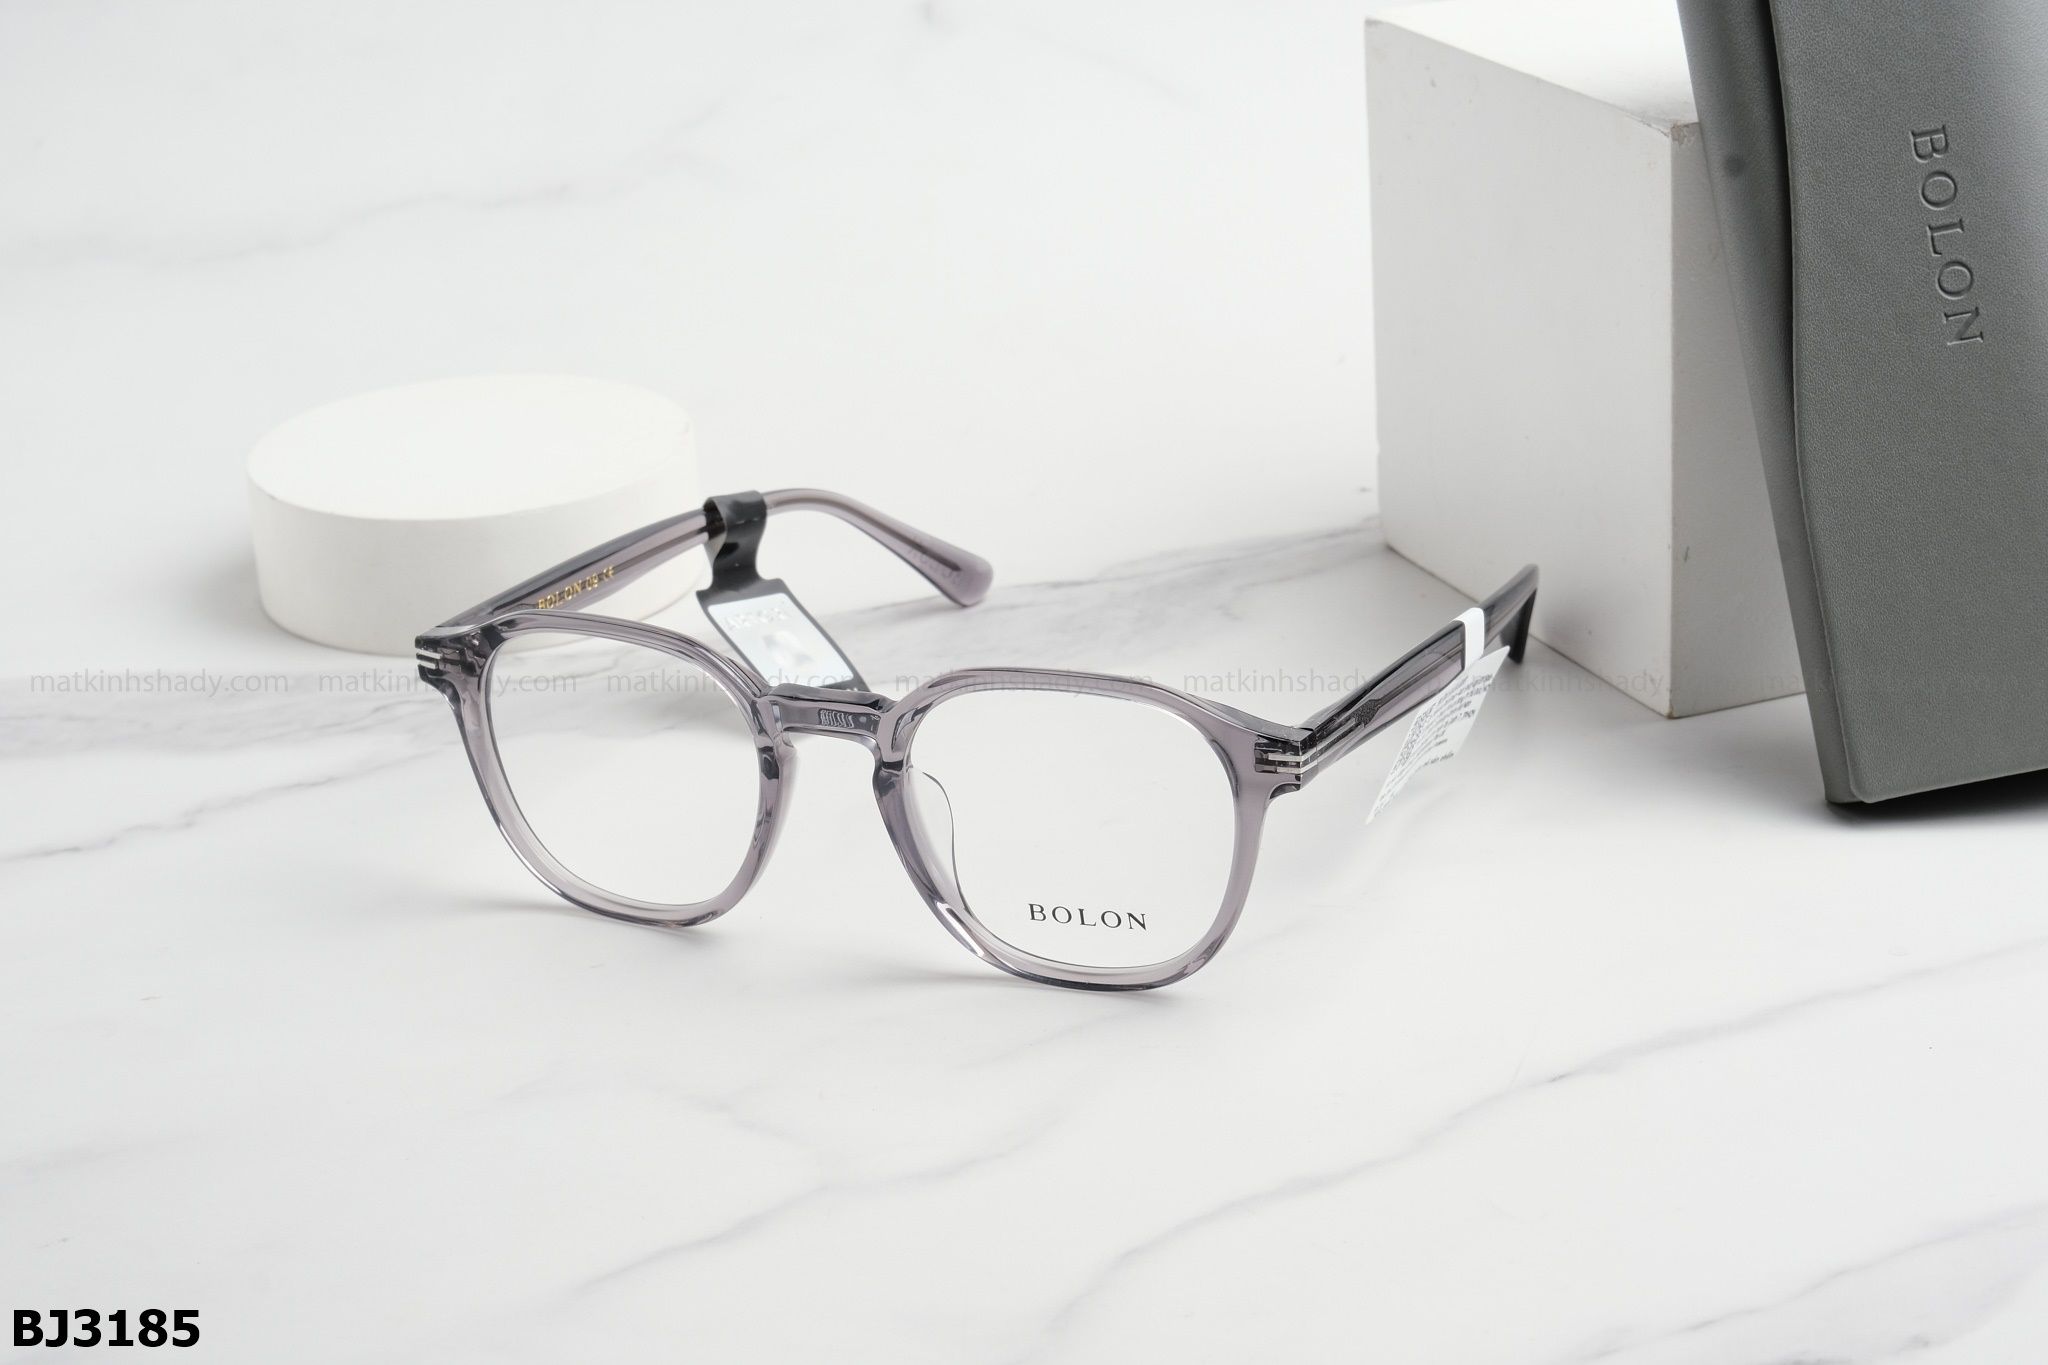  Bolon Eyewear - Glasses - BJ3185 